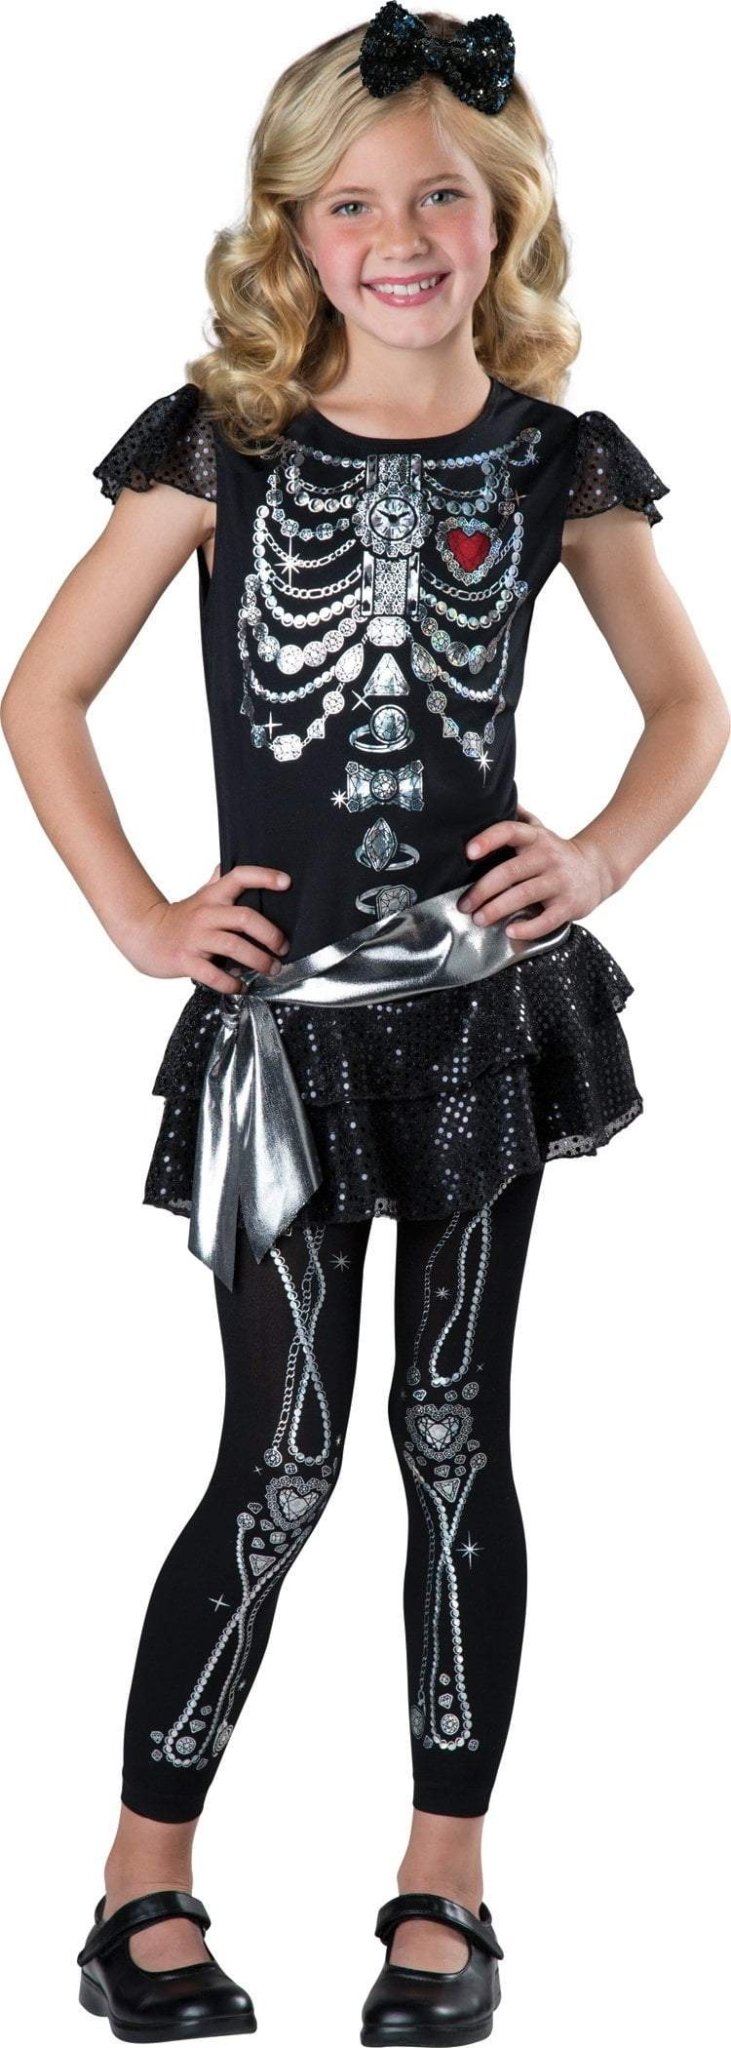 Girls Sparkly Skeleton Costume - JJ's Party House